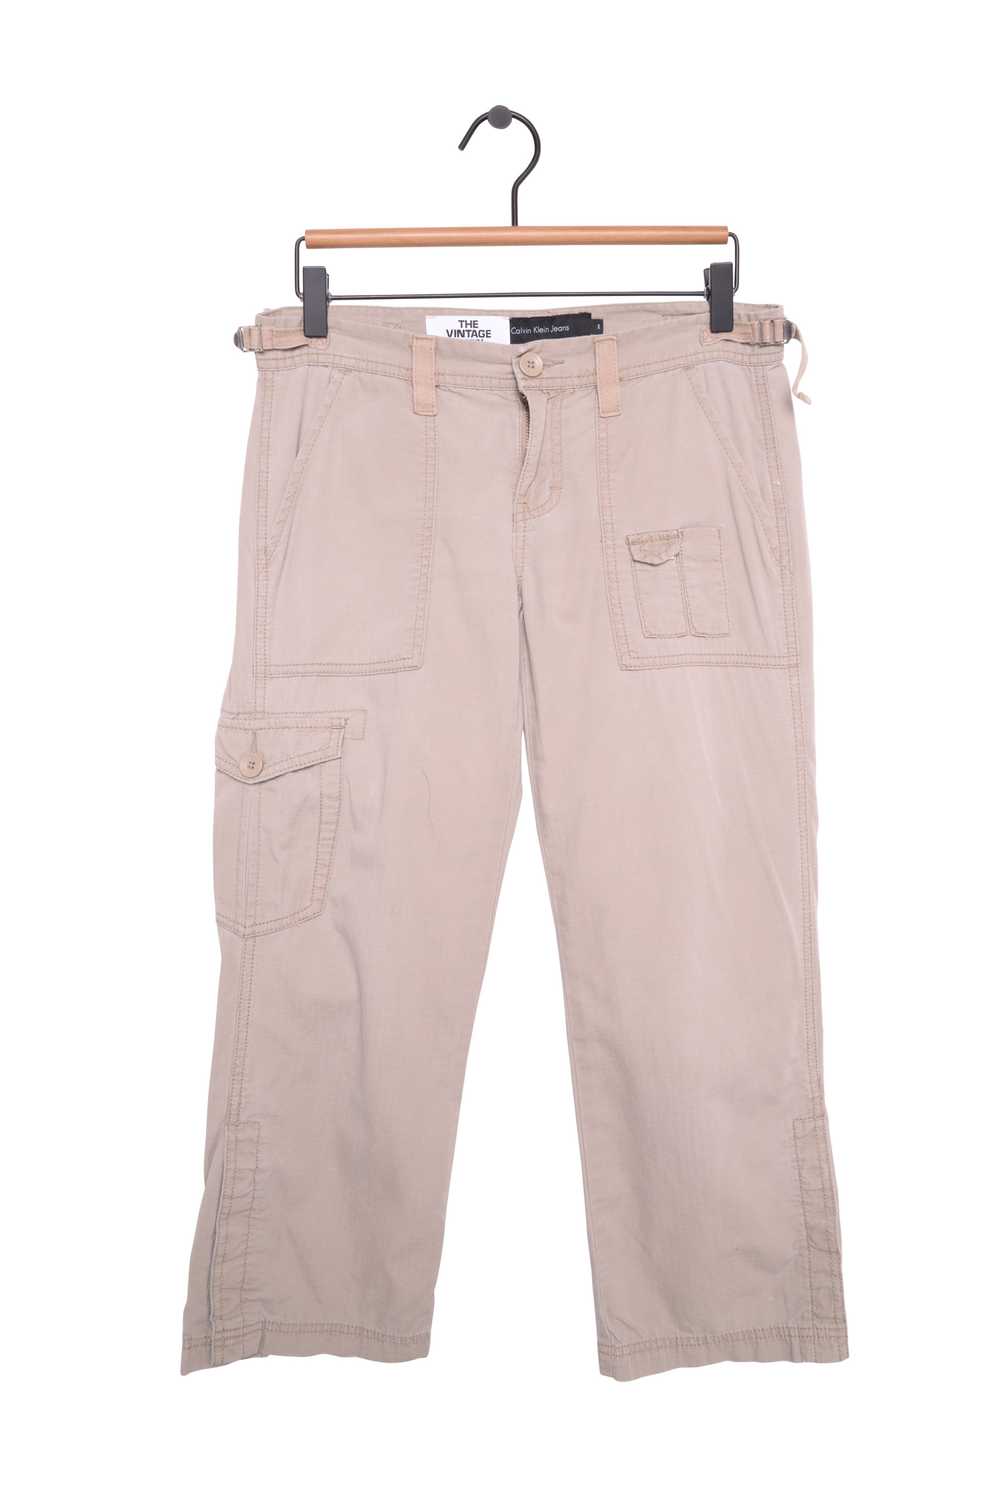 Y2K Calvin Klein Cargo Pants - image 1